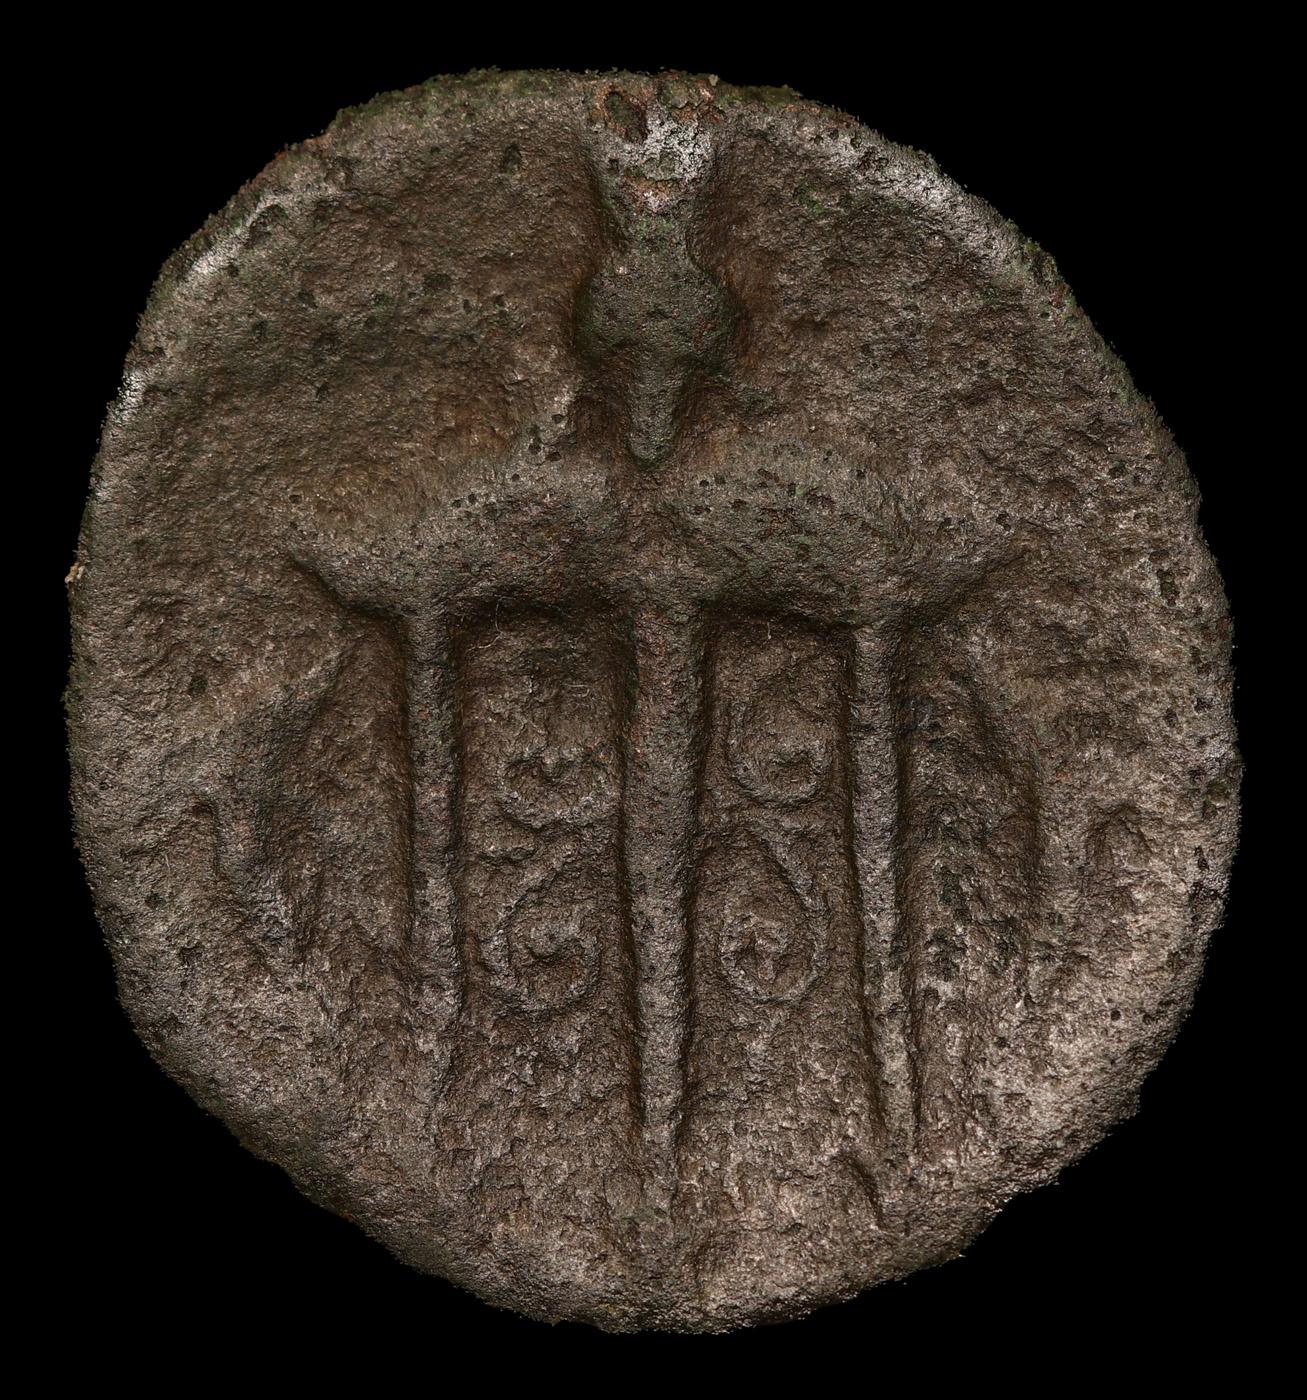 275 -216 BC Ancient Greece Sicily, Syracus Hieron II 21mm 7.26g Ancient Grades vf